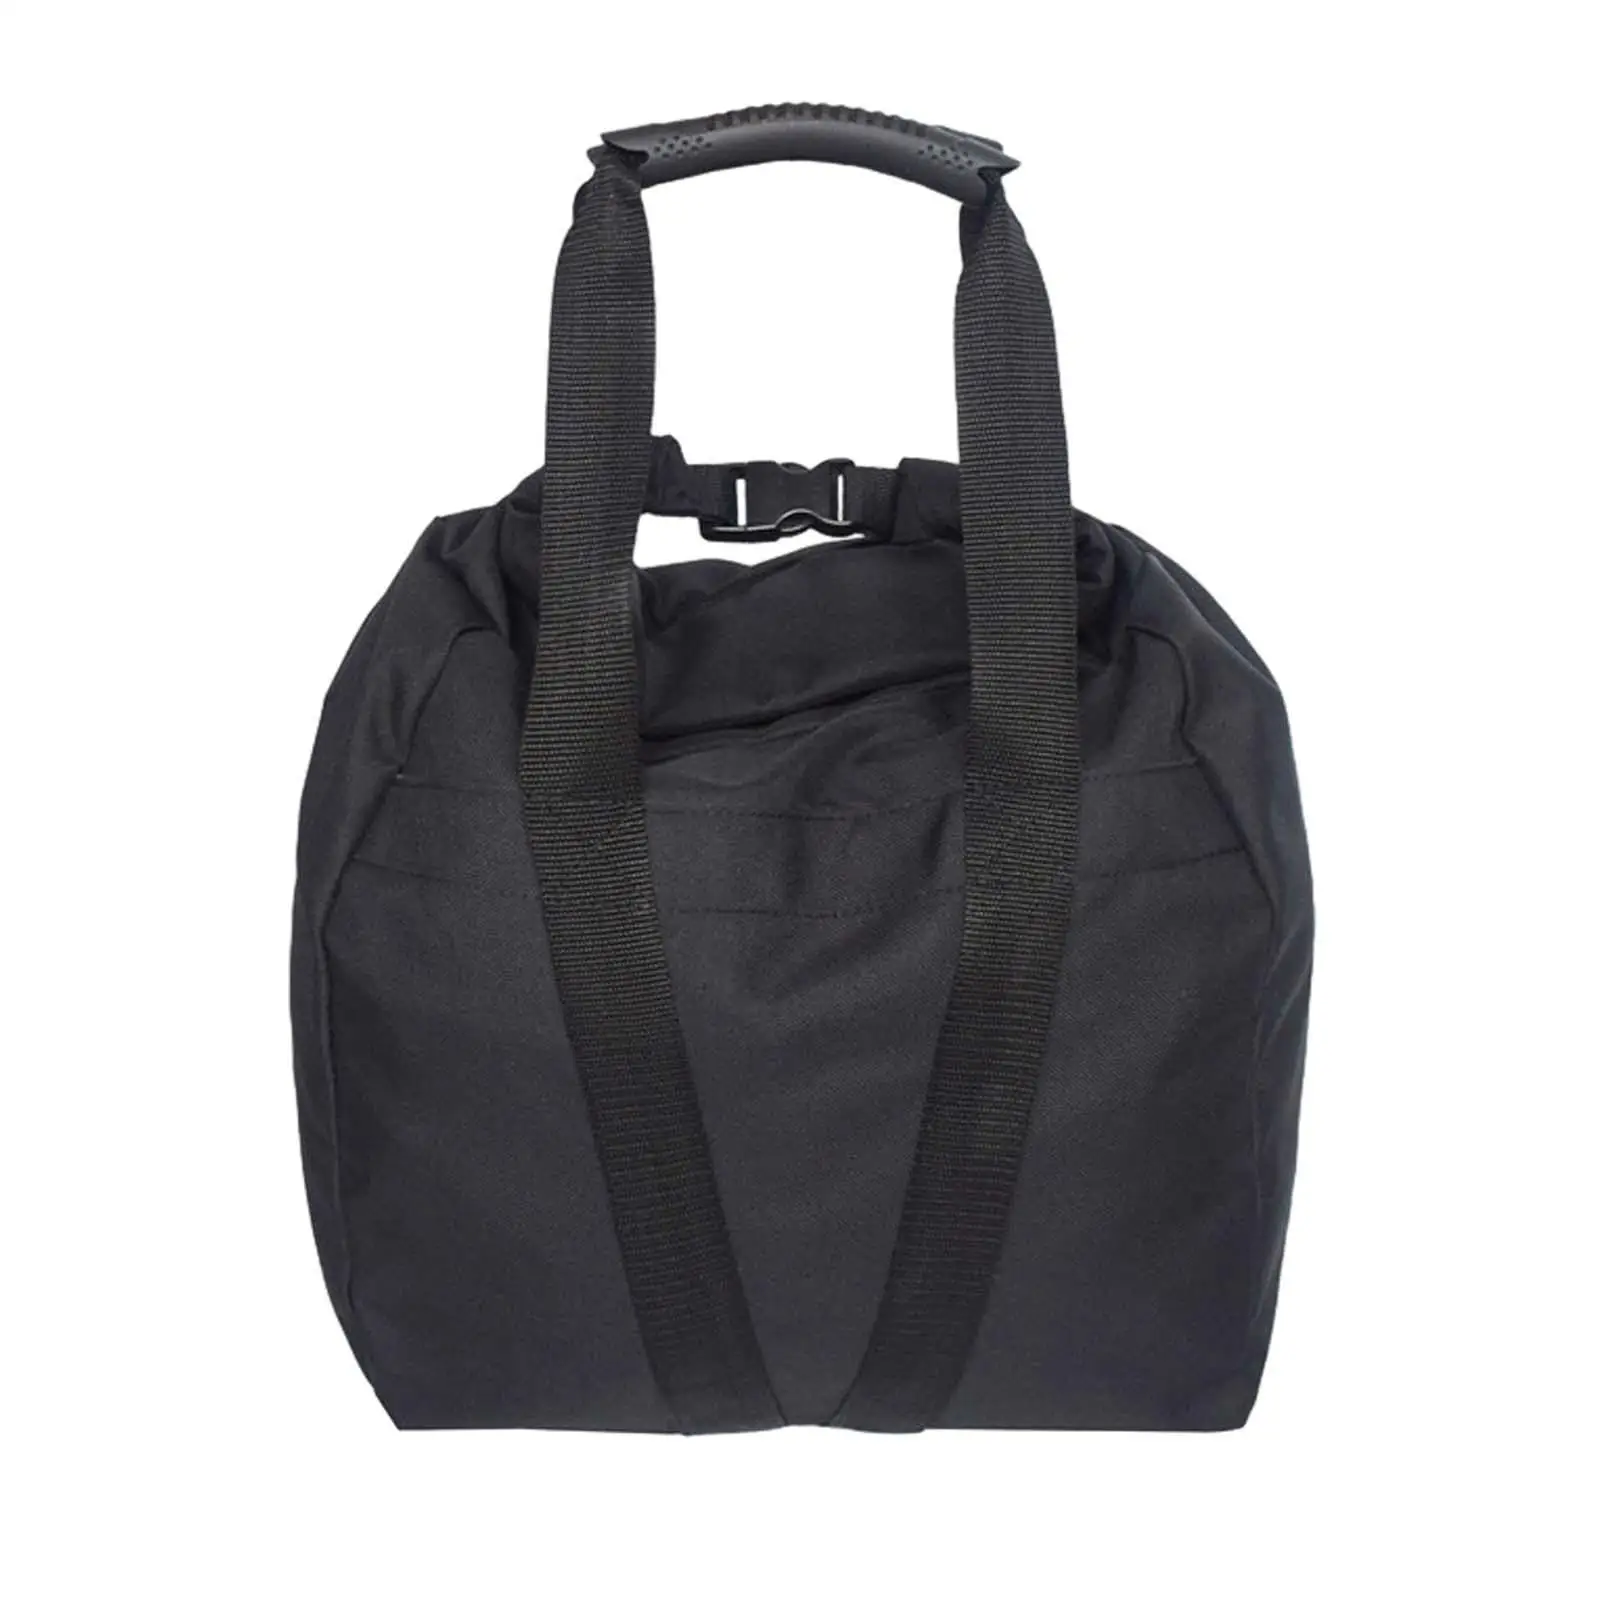 Weight Sandbag Adjustable Filler Bags for Training Household Boxing Training